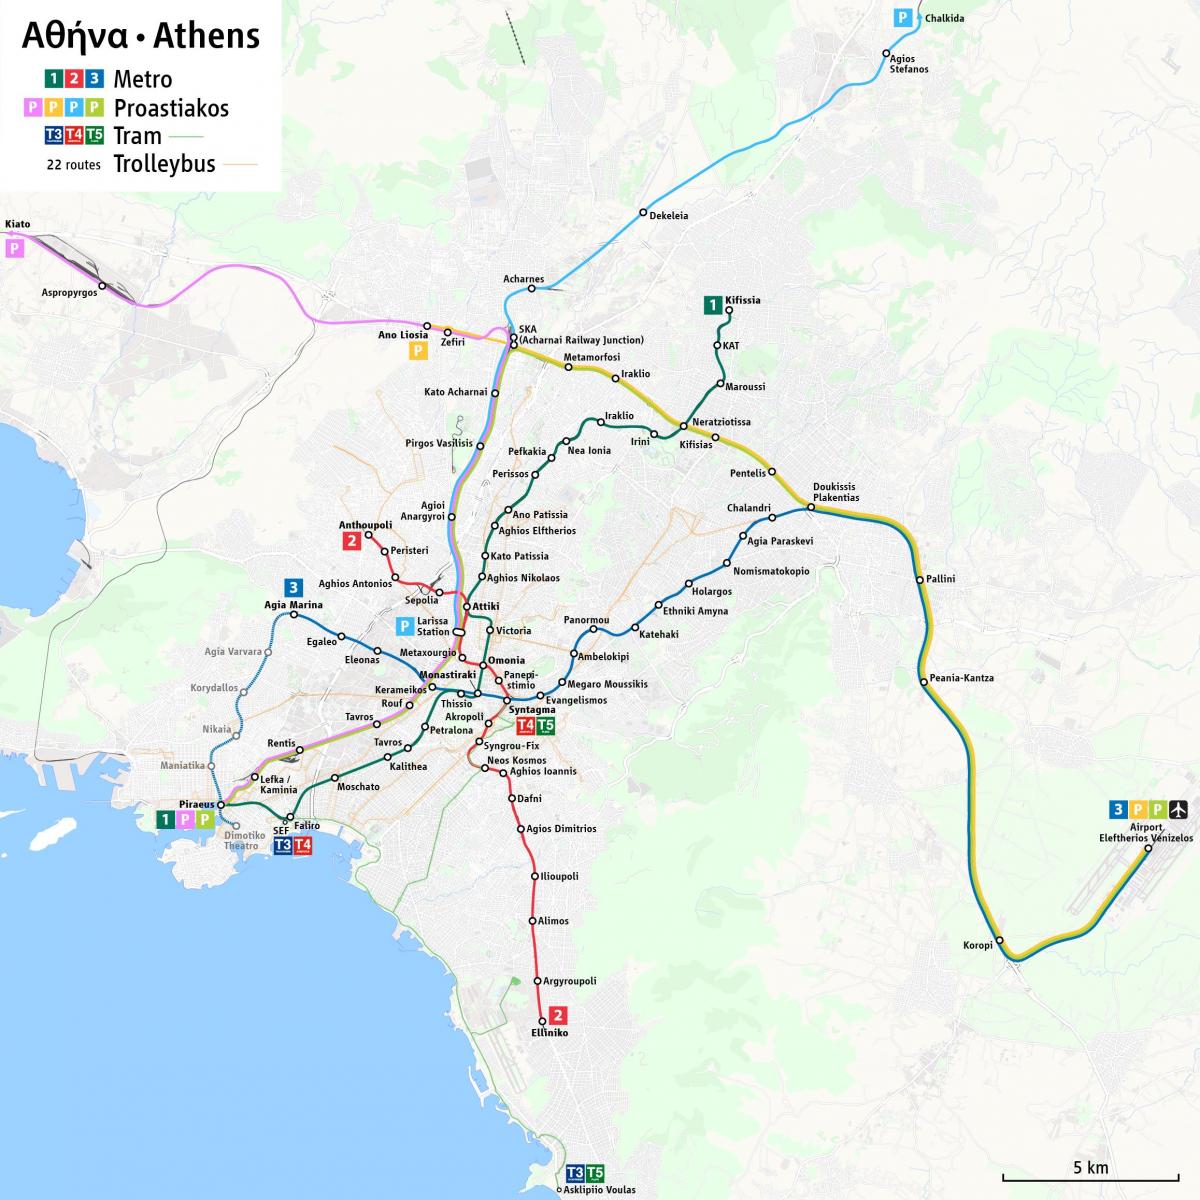 Athens suburban railway map